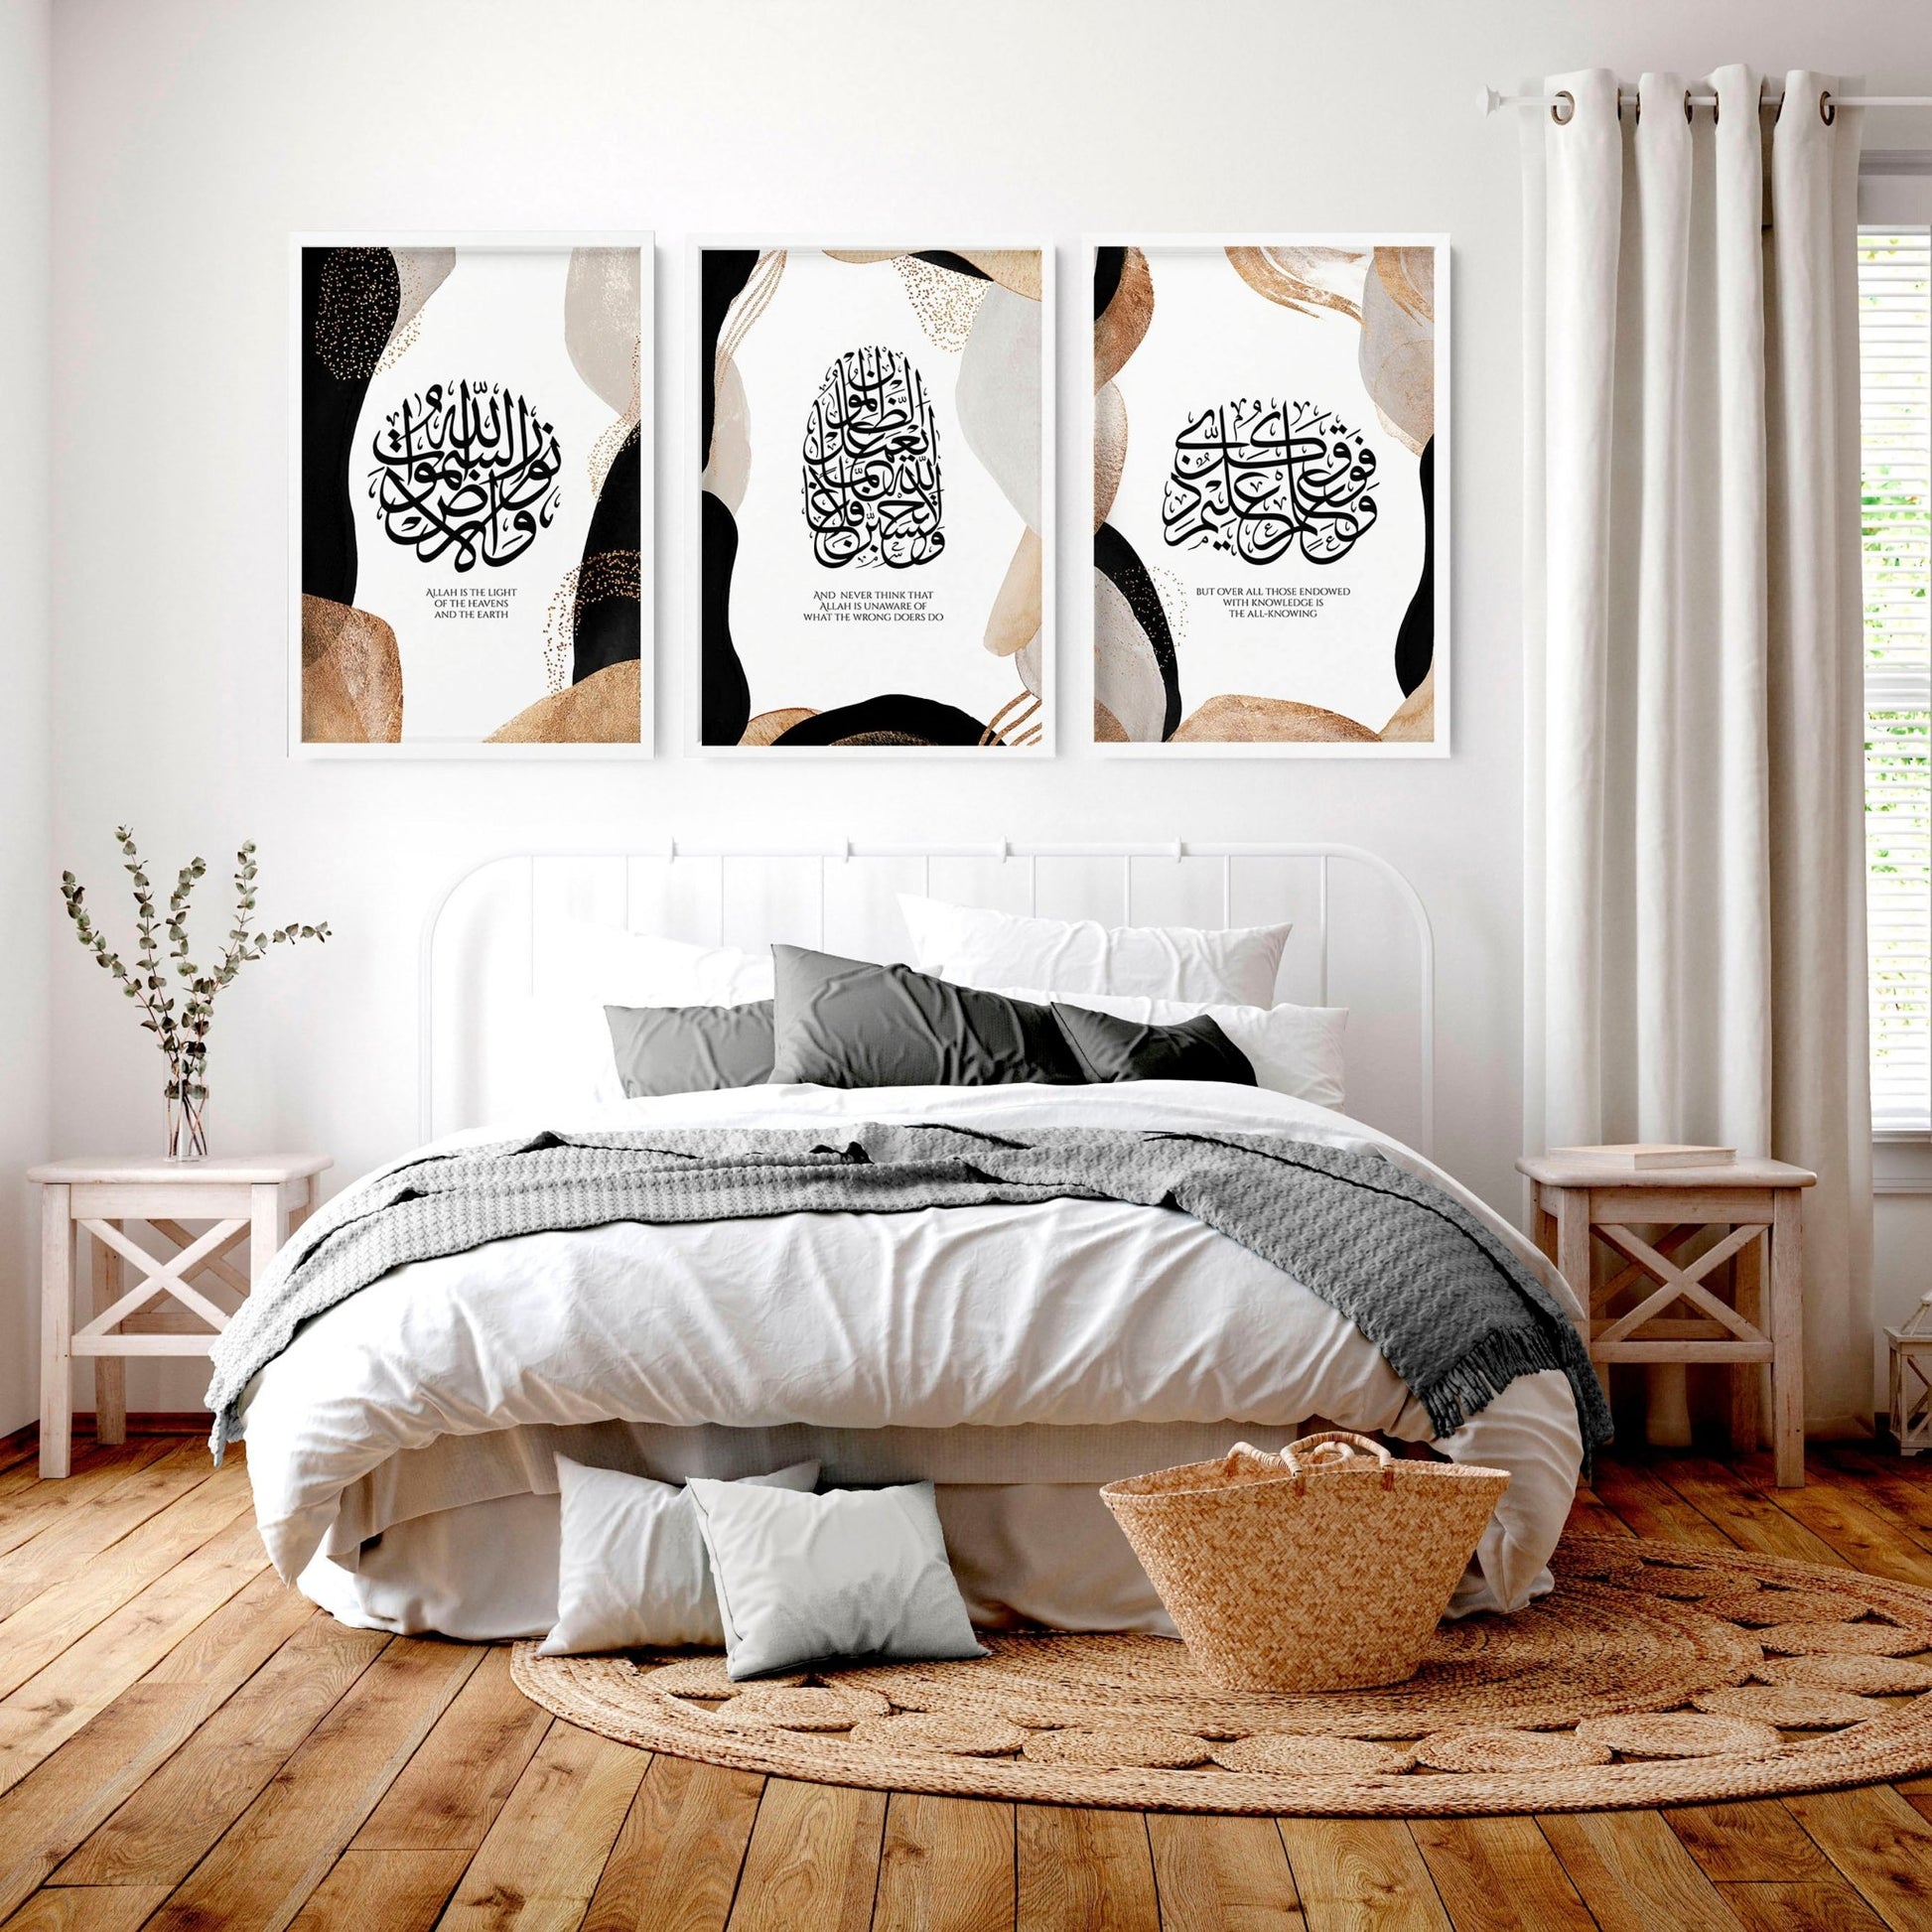 Ramadan Mubarak decorations set of 3 wall art prints for Bedroom